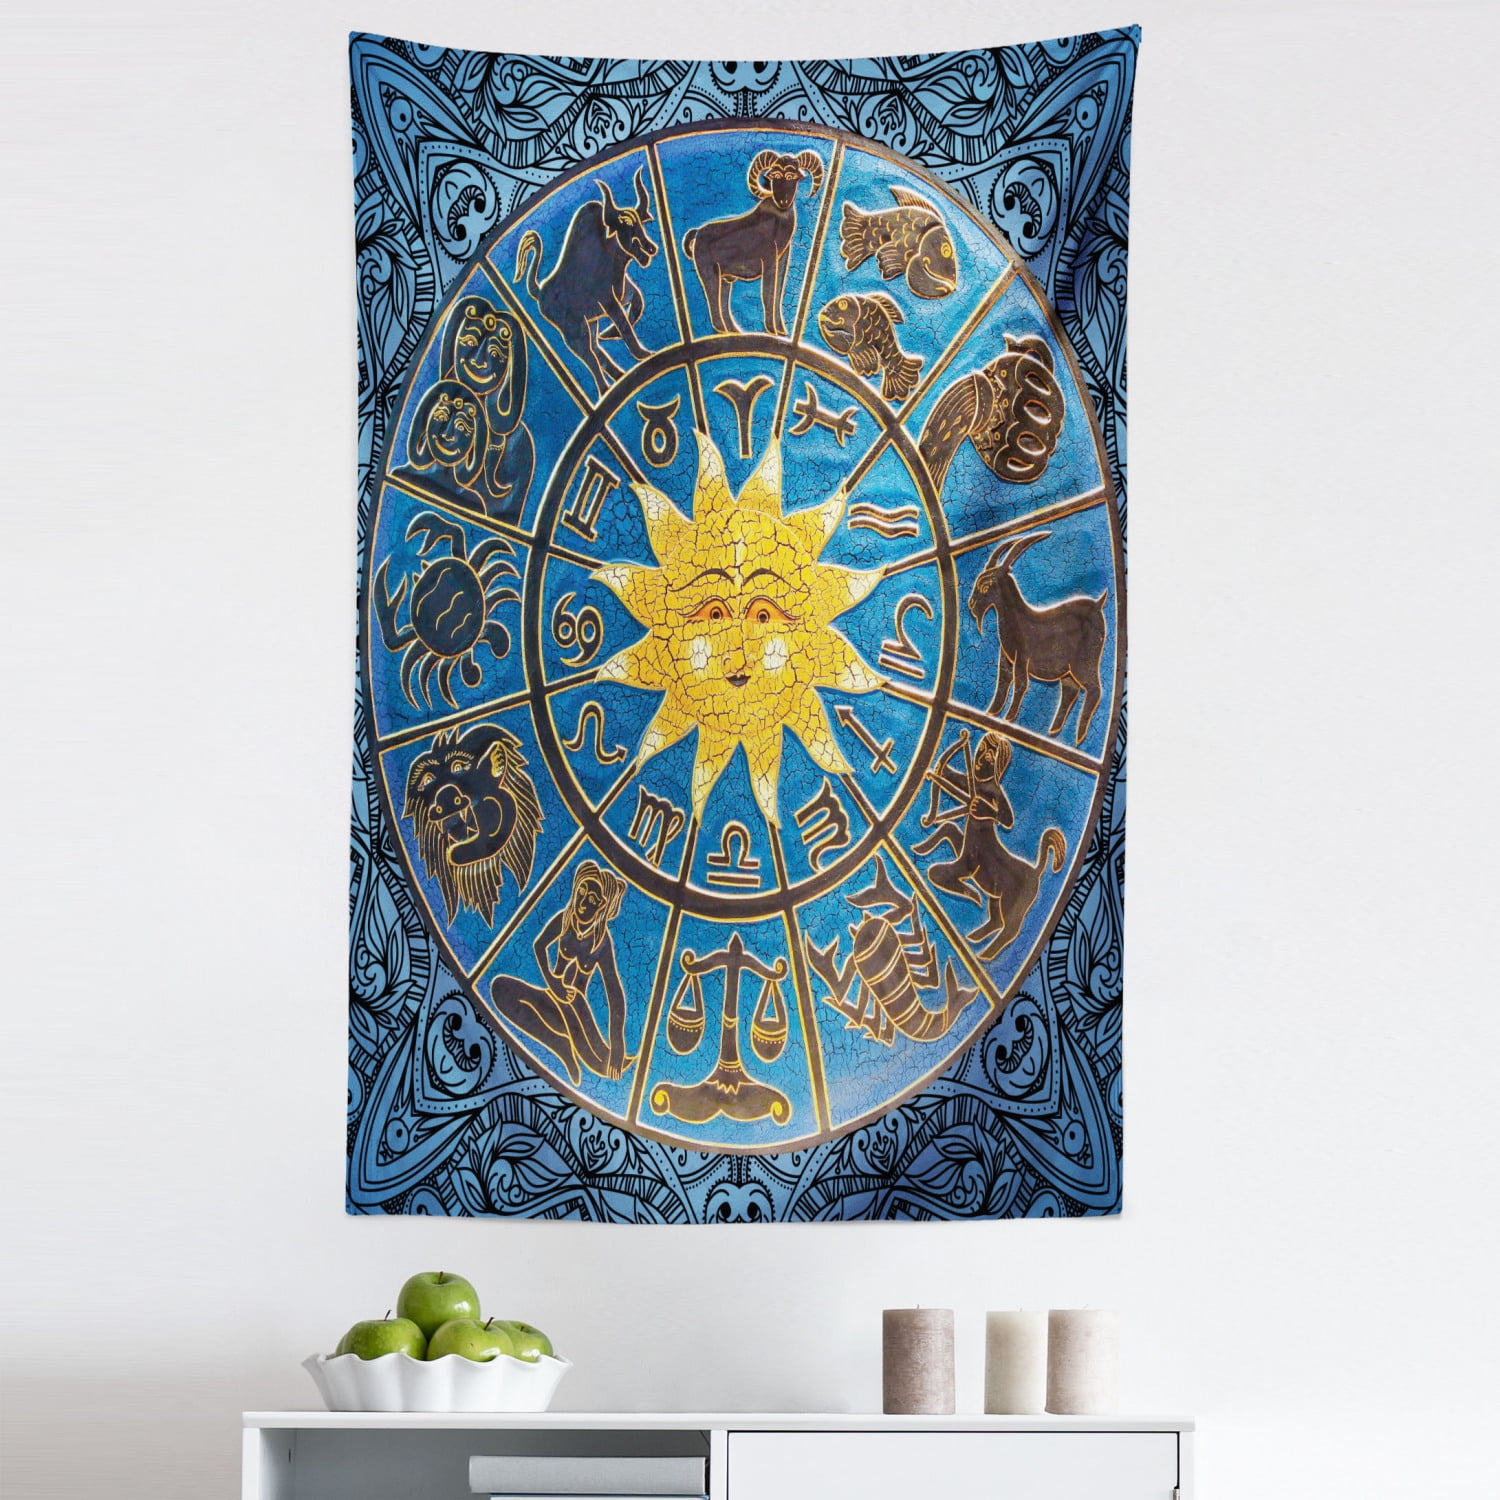 Cotton Hippie Astrology Zodiac Bizarre Sign Door Wall Hanging Tapestry Poster 